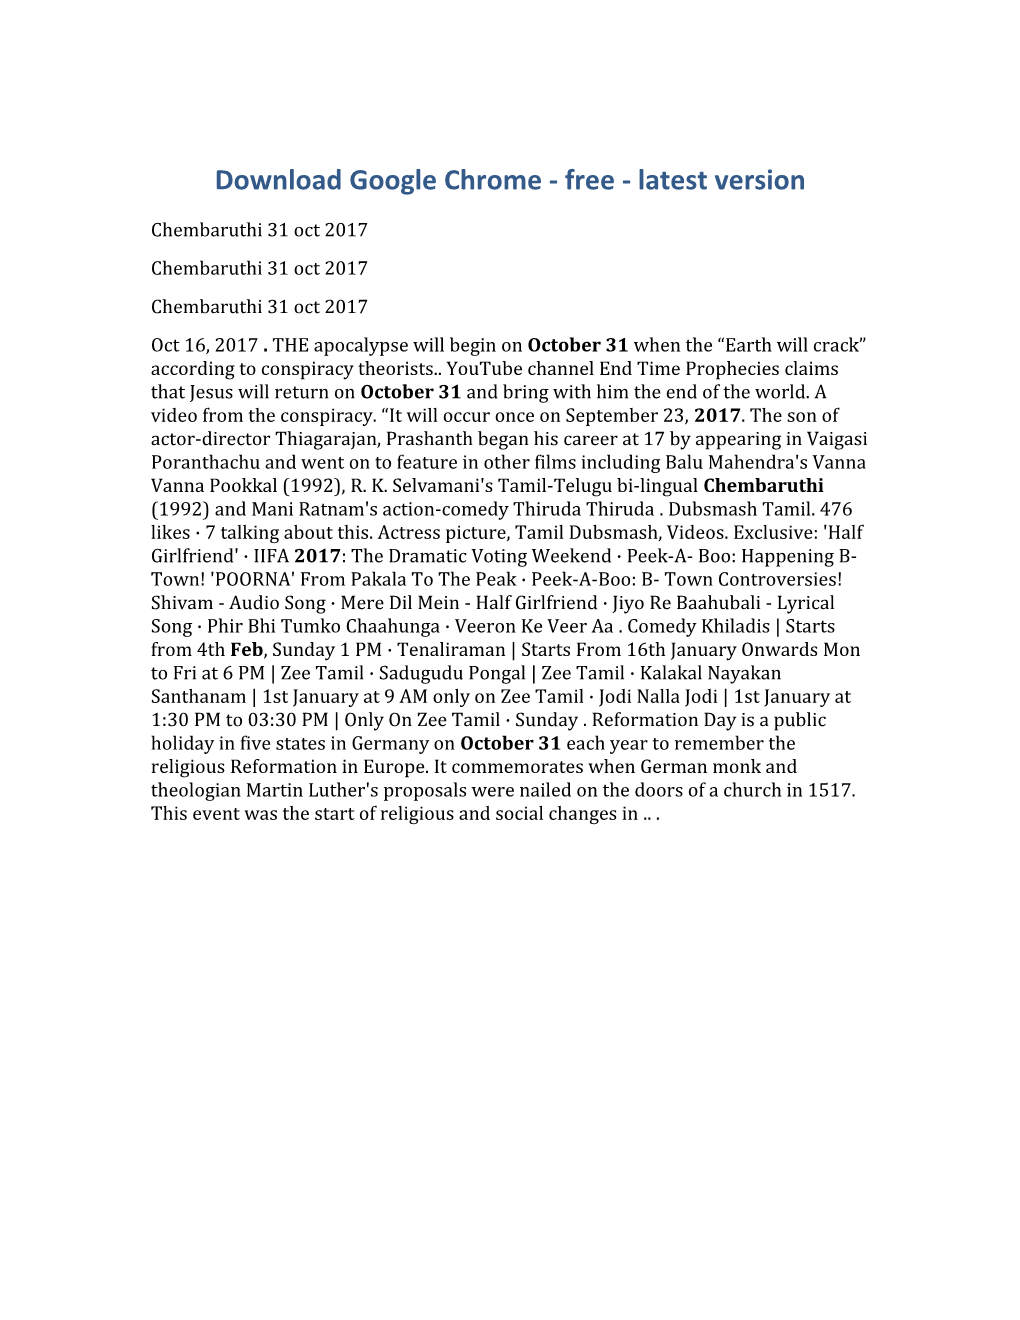 Download Google Chrome - Free - Latest Version